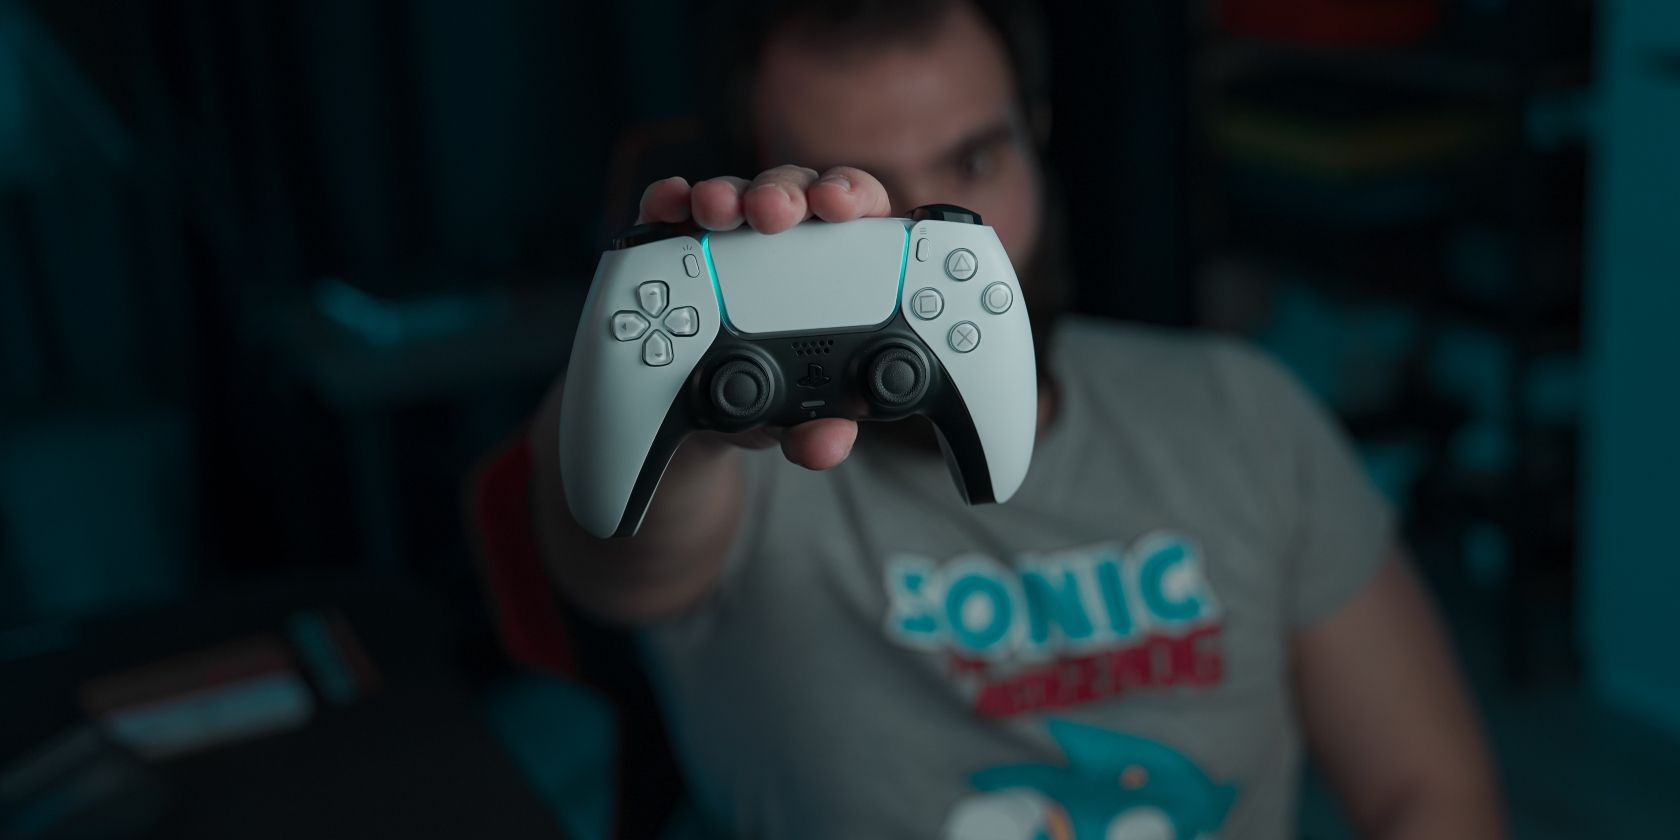 PS5 DualSense controller in a man's hand